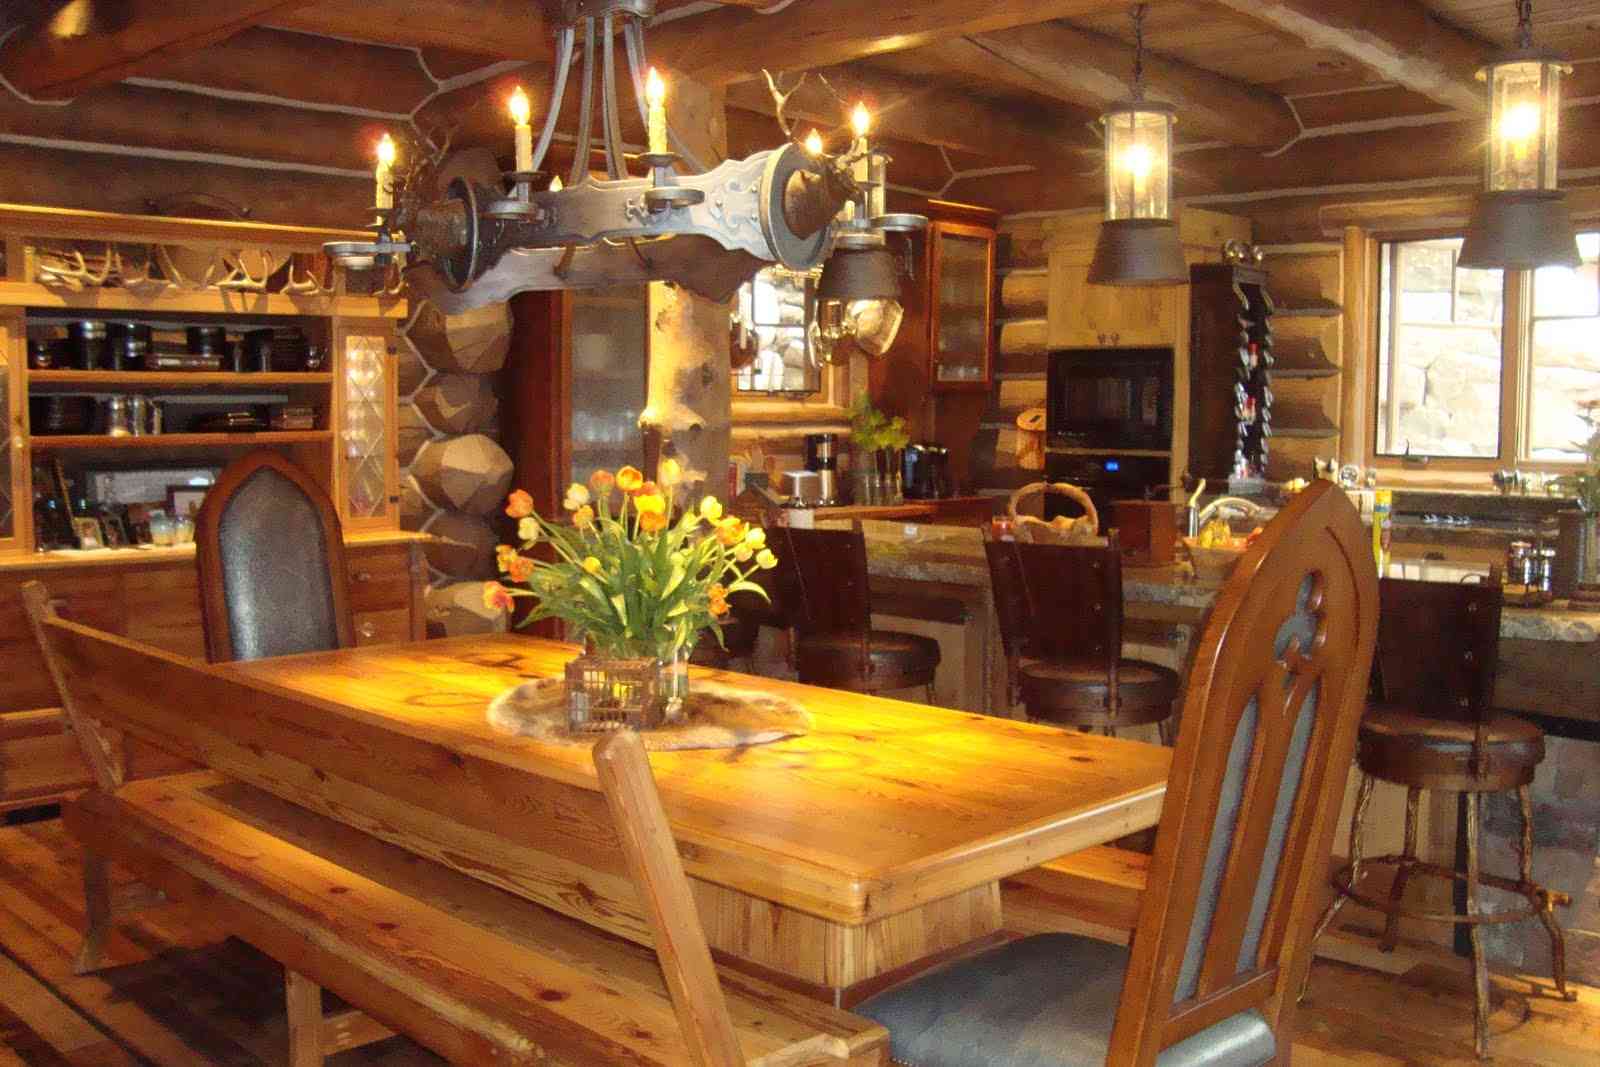 Log Cabin Decor: Enjoy True Country Style - Decor Ideas